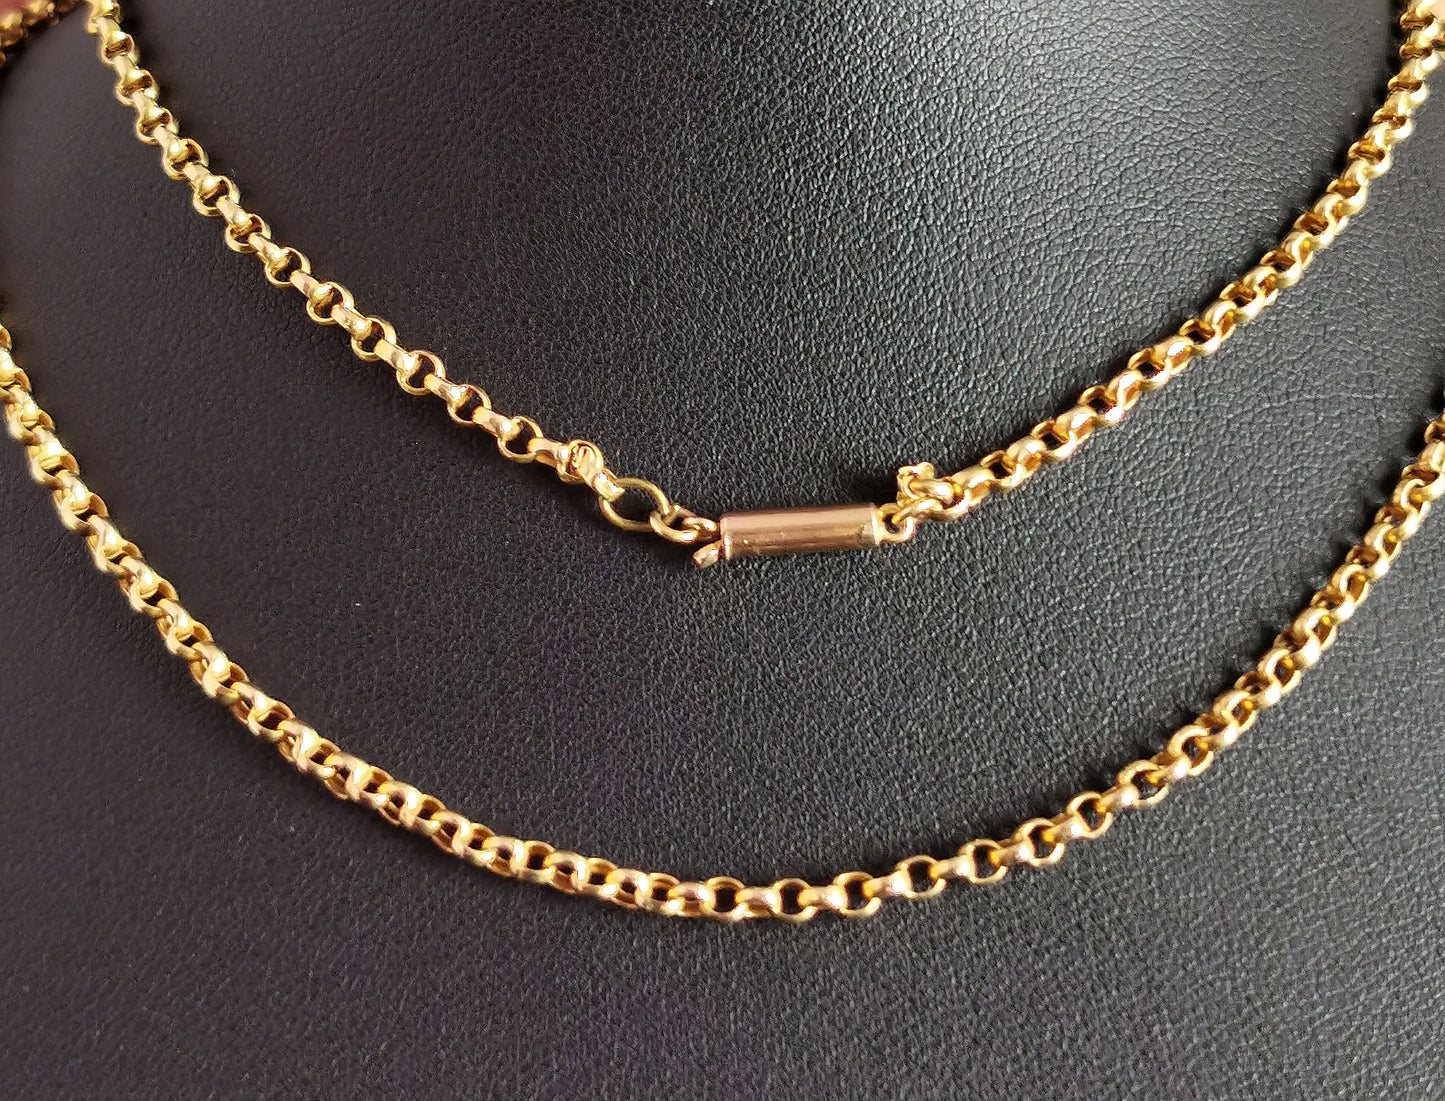 Antique 9ct gold Belcher link chain necklace, rolo link, Edwardian